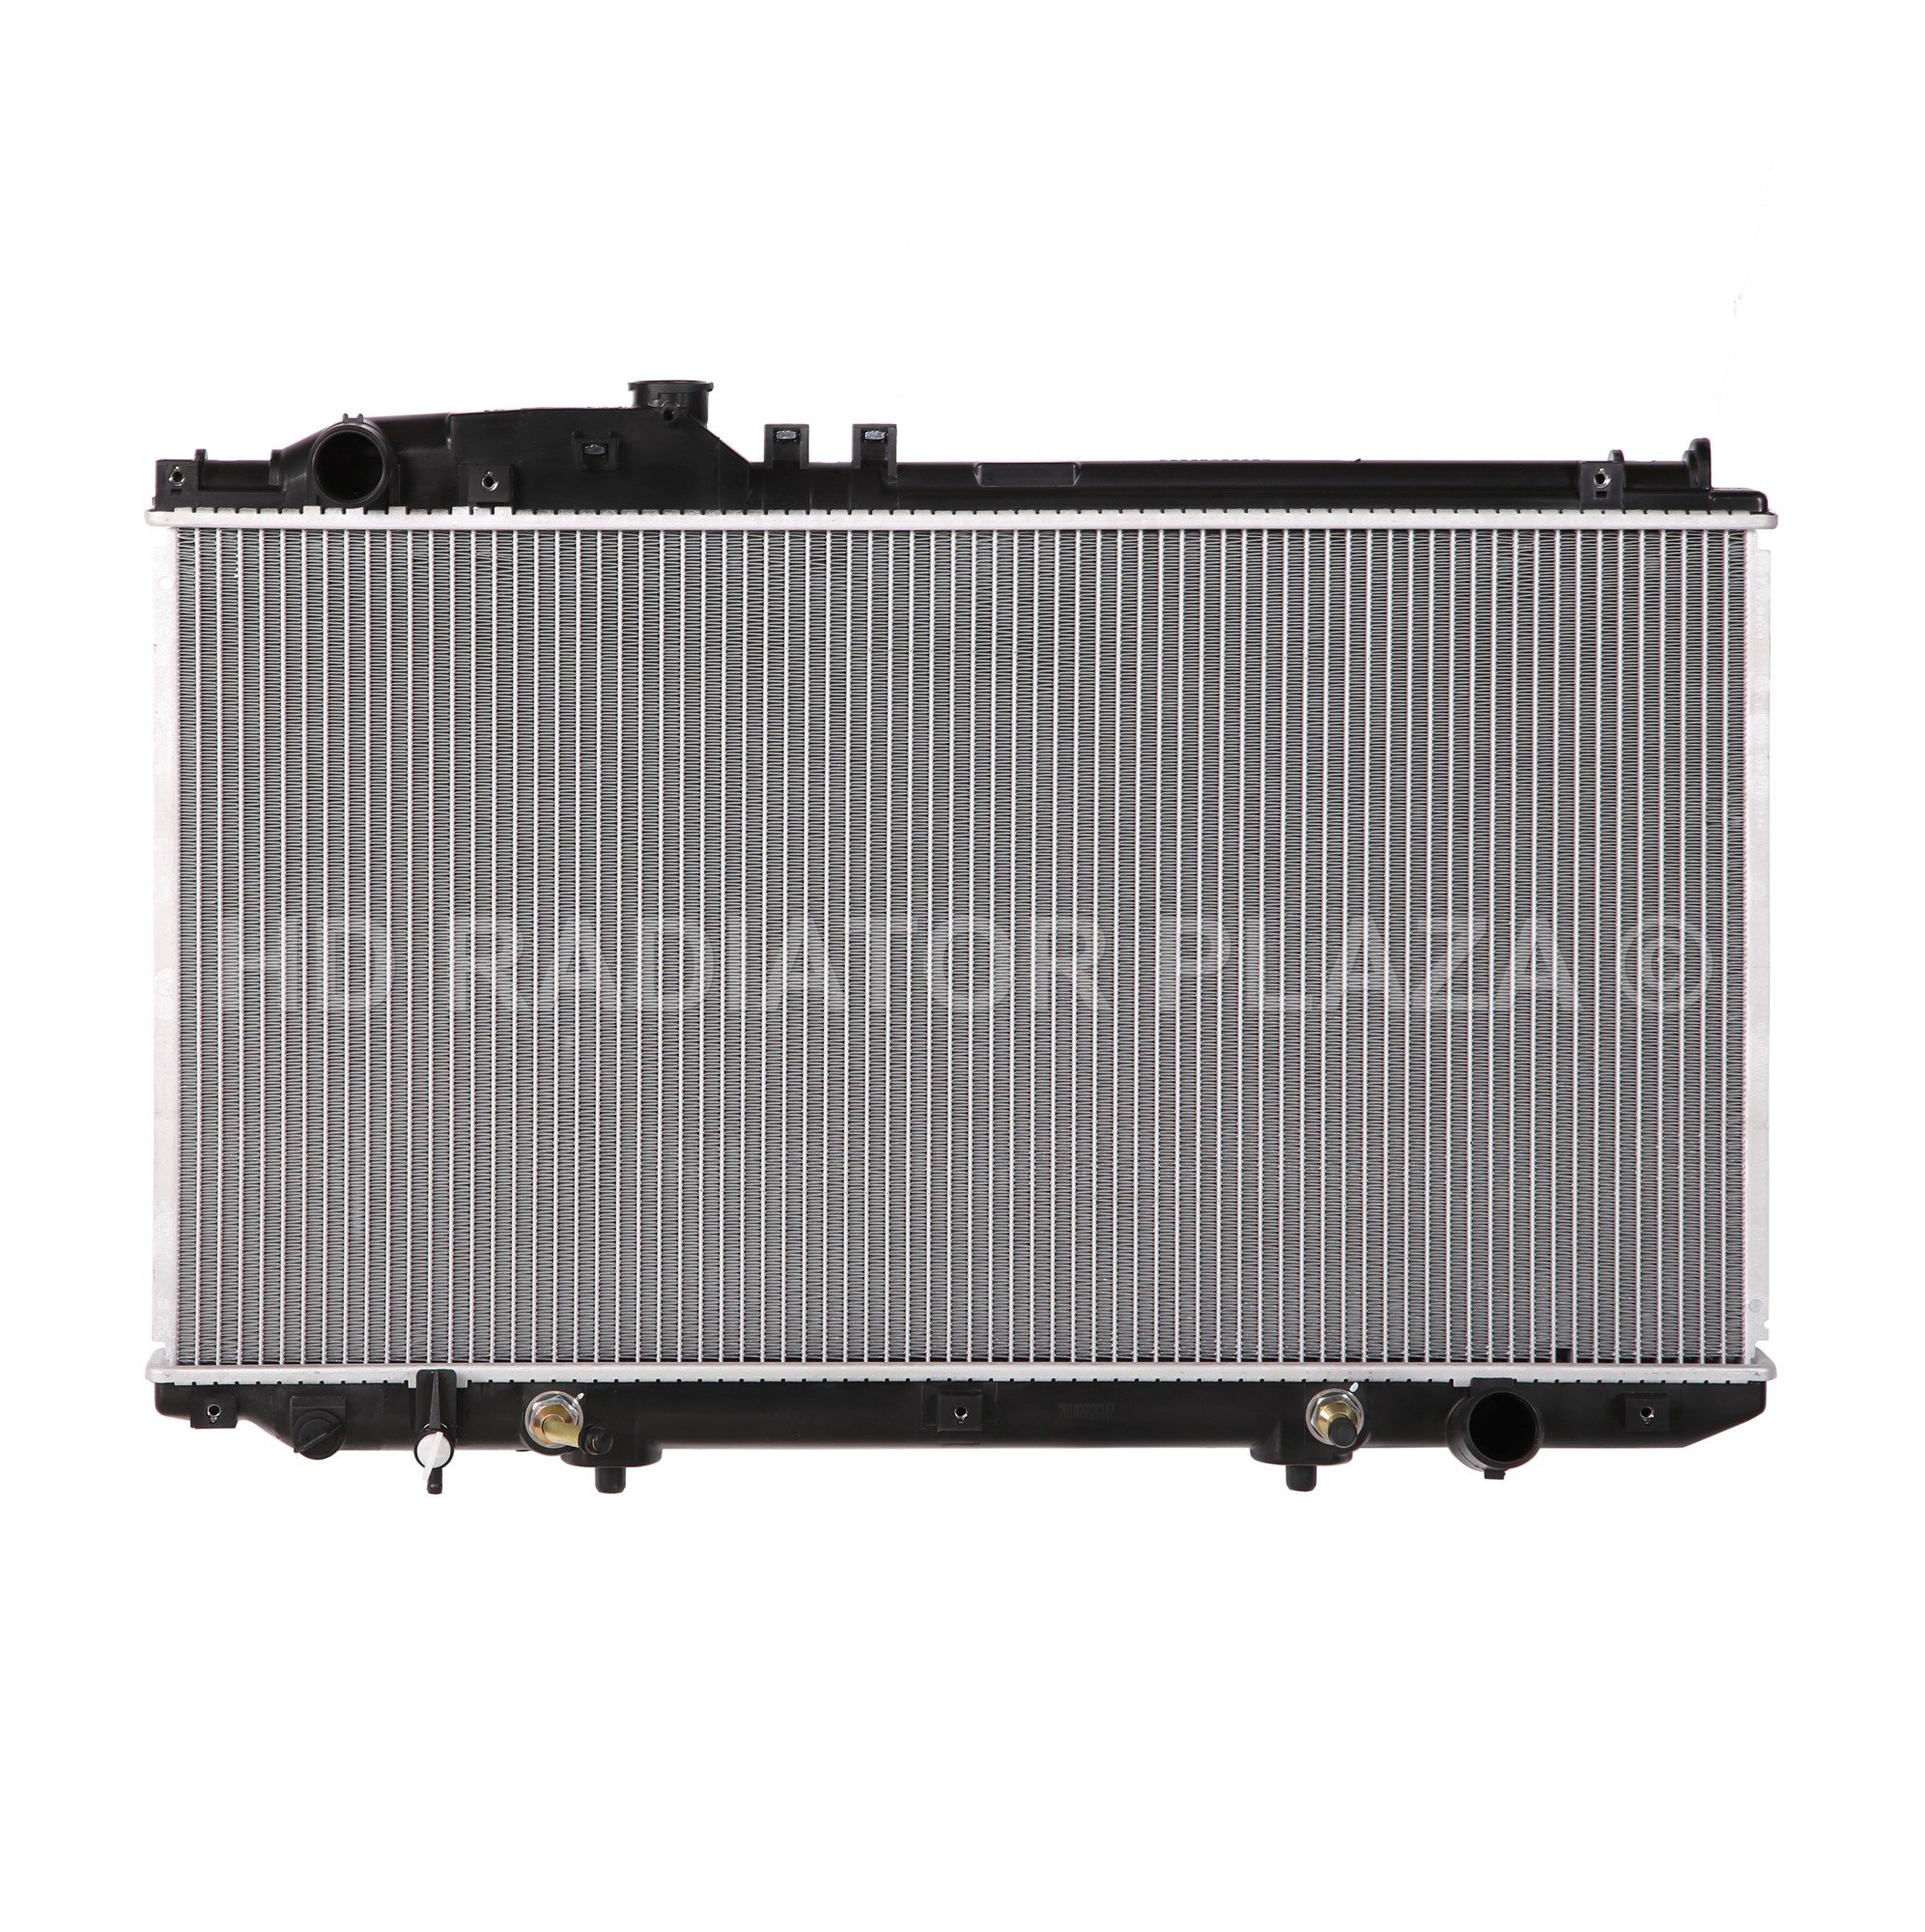 Radiator for 02-10 Lexus SC430